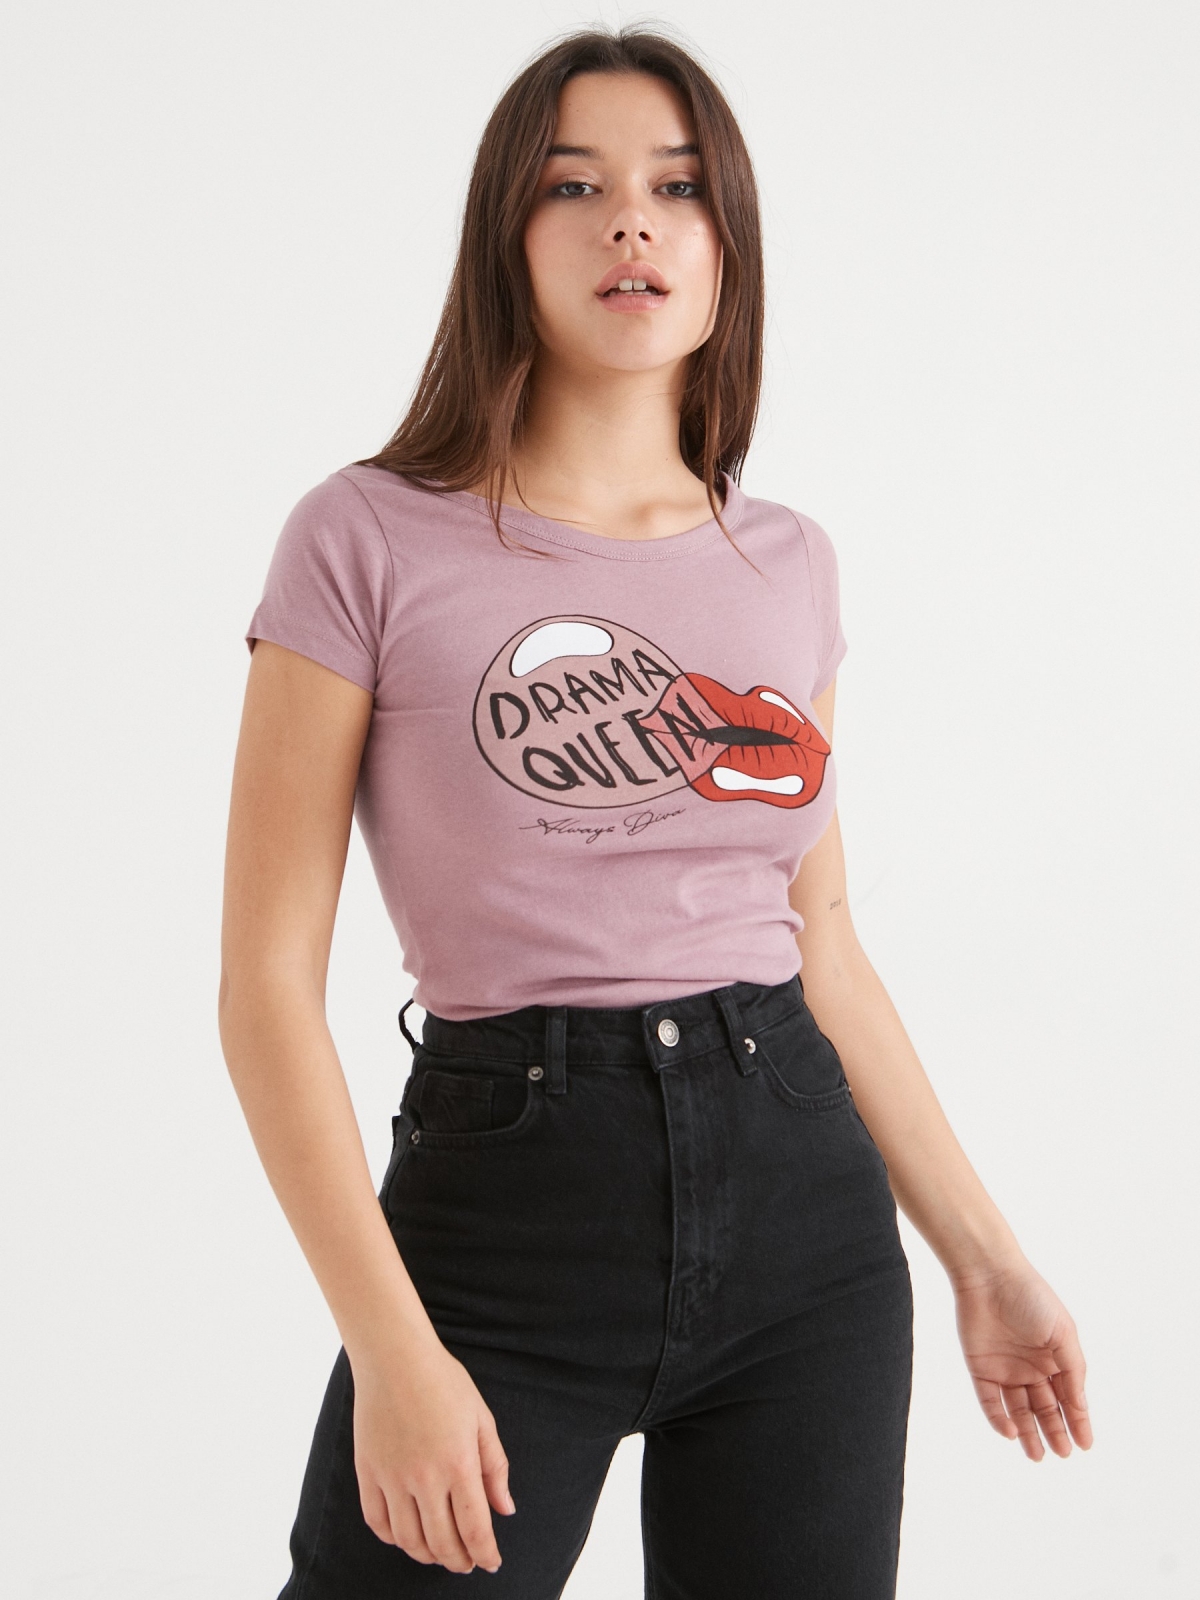 Capilares Pantano lazo Camiseta Drama Queen | Camisetas Mujer | INSIDE